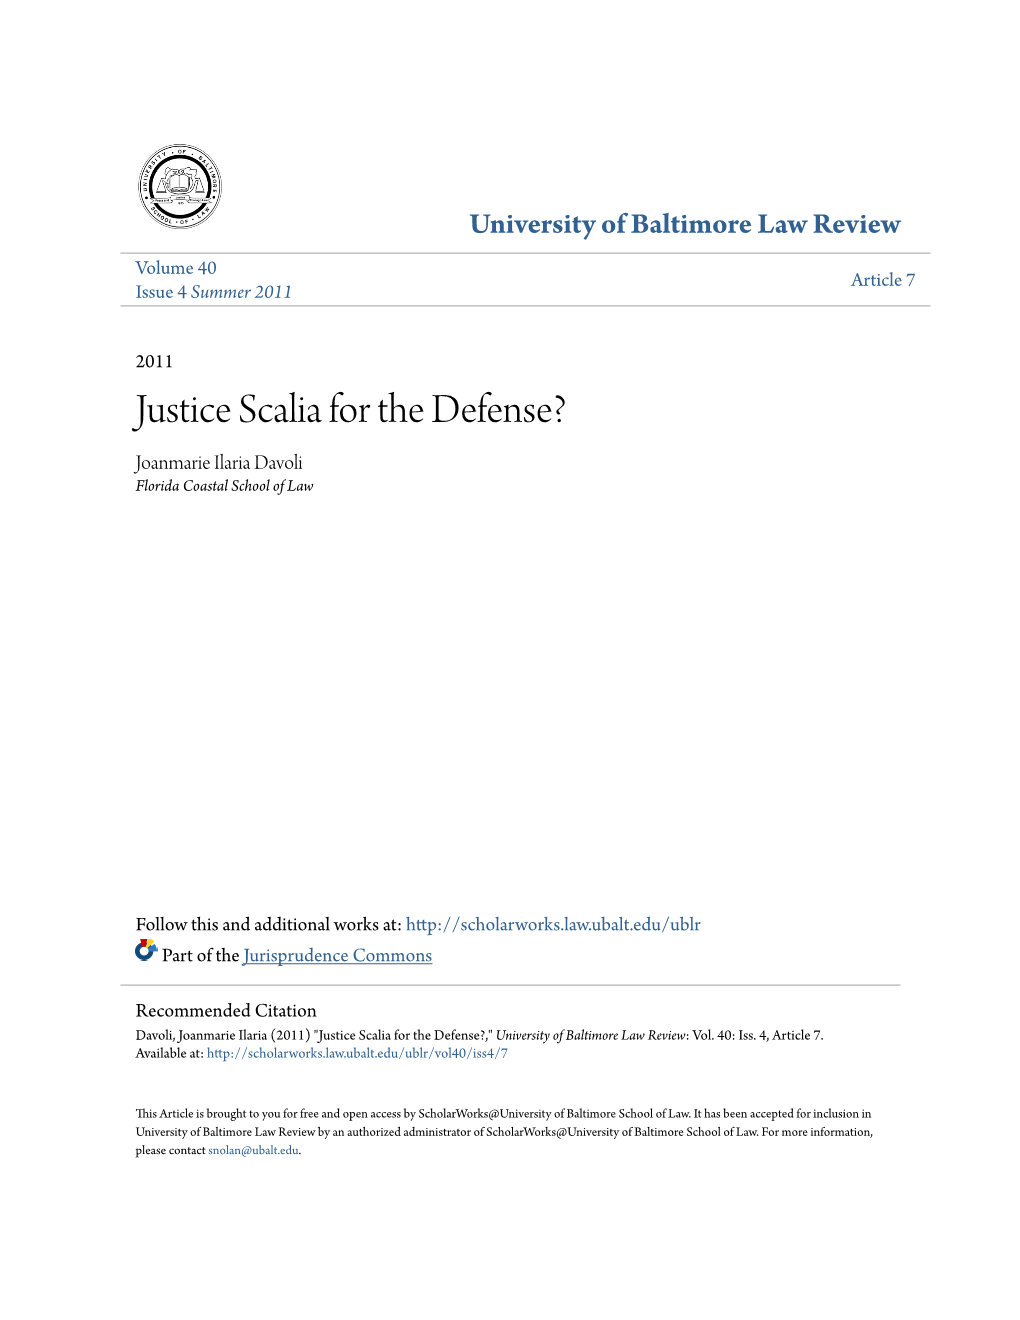 Justice Scalia for the Defense? Joanmarie Ilaria Davoli Florida Coastal School of Law